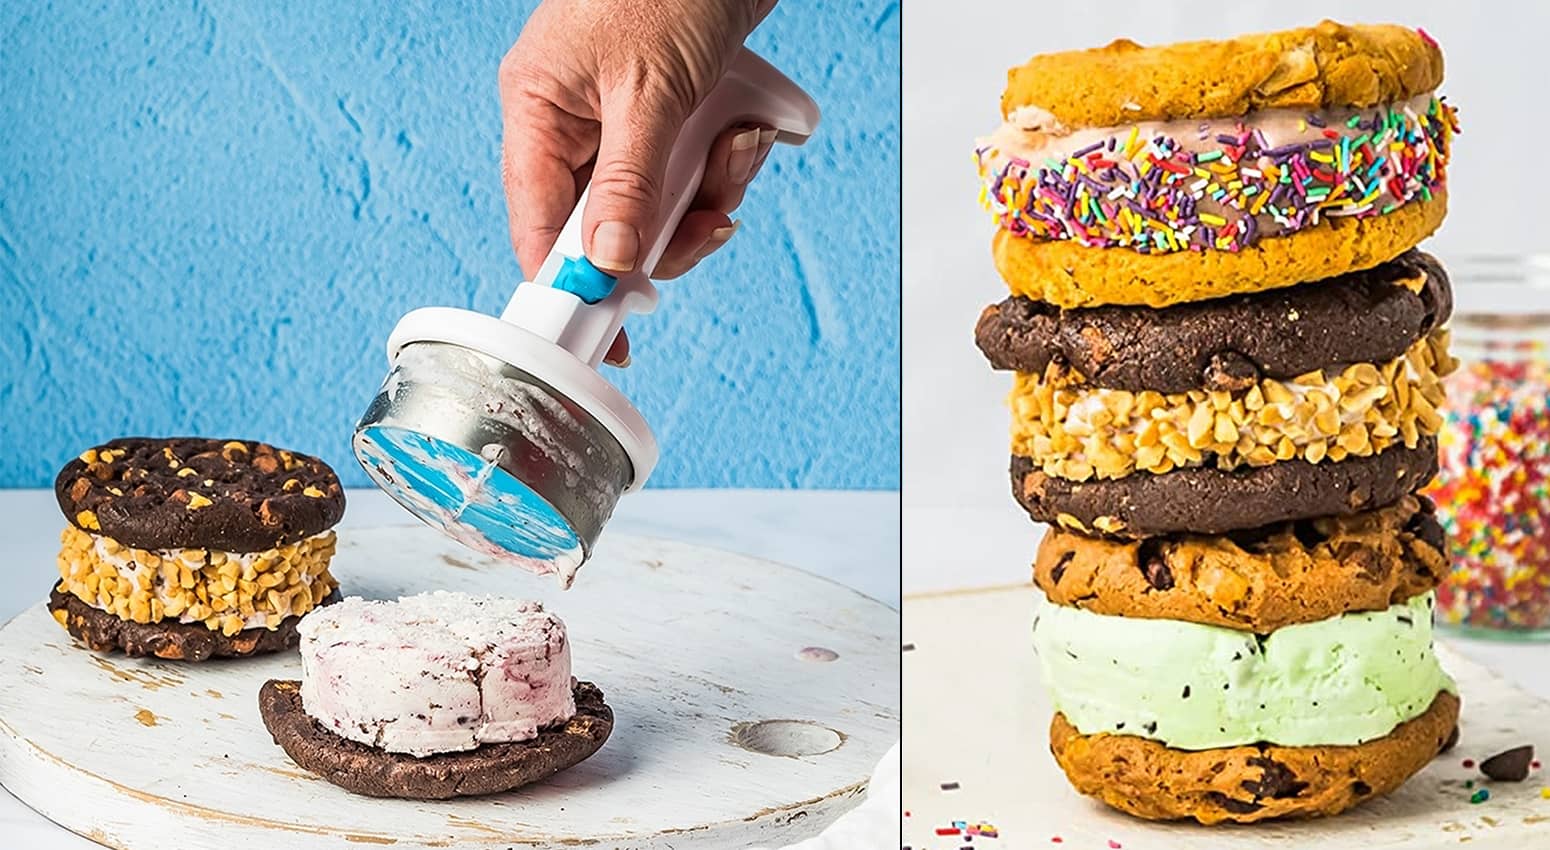 Dreamfarm Icepo - Cylinder Ice Cream Scoop For Ice Cream Sandwiches